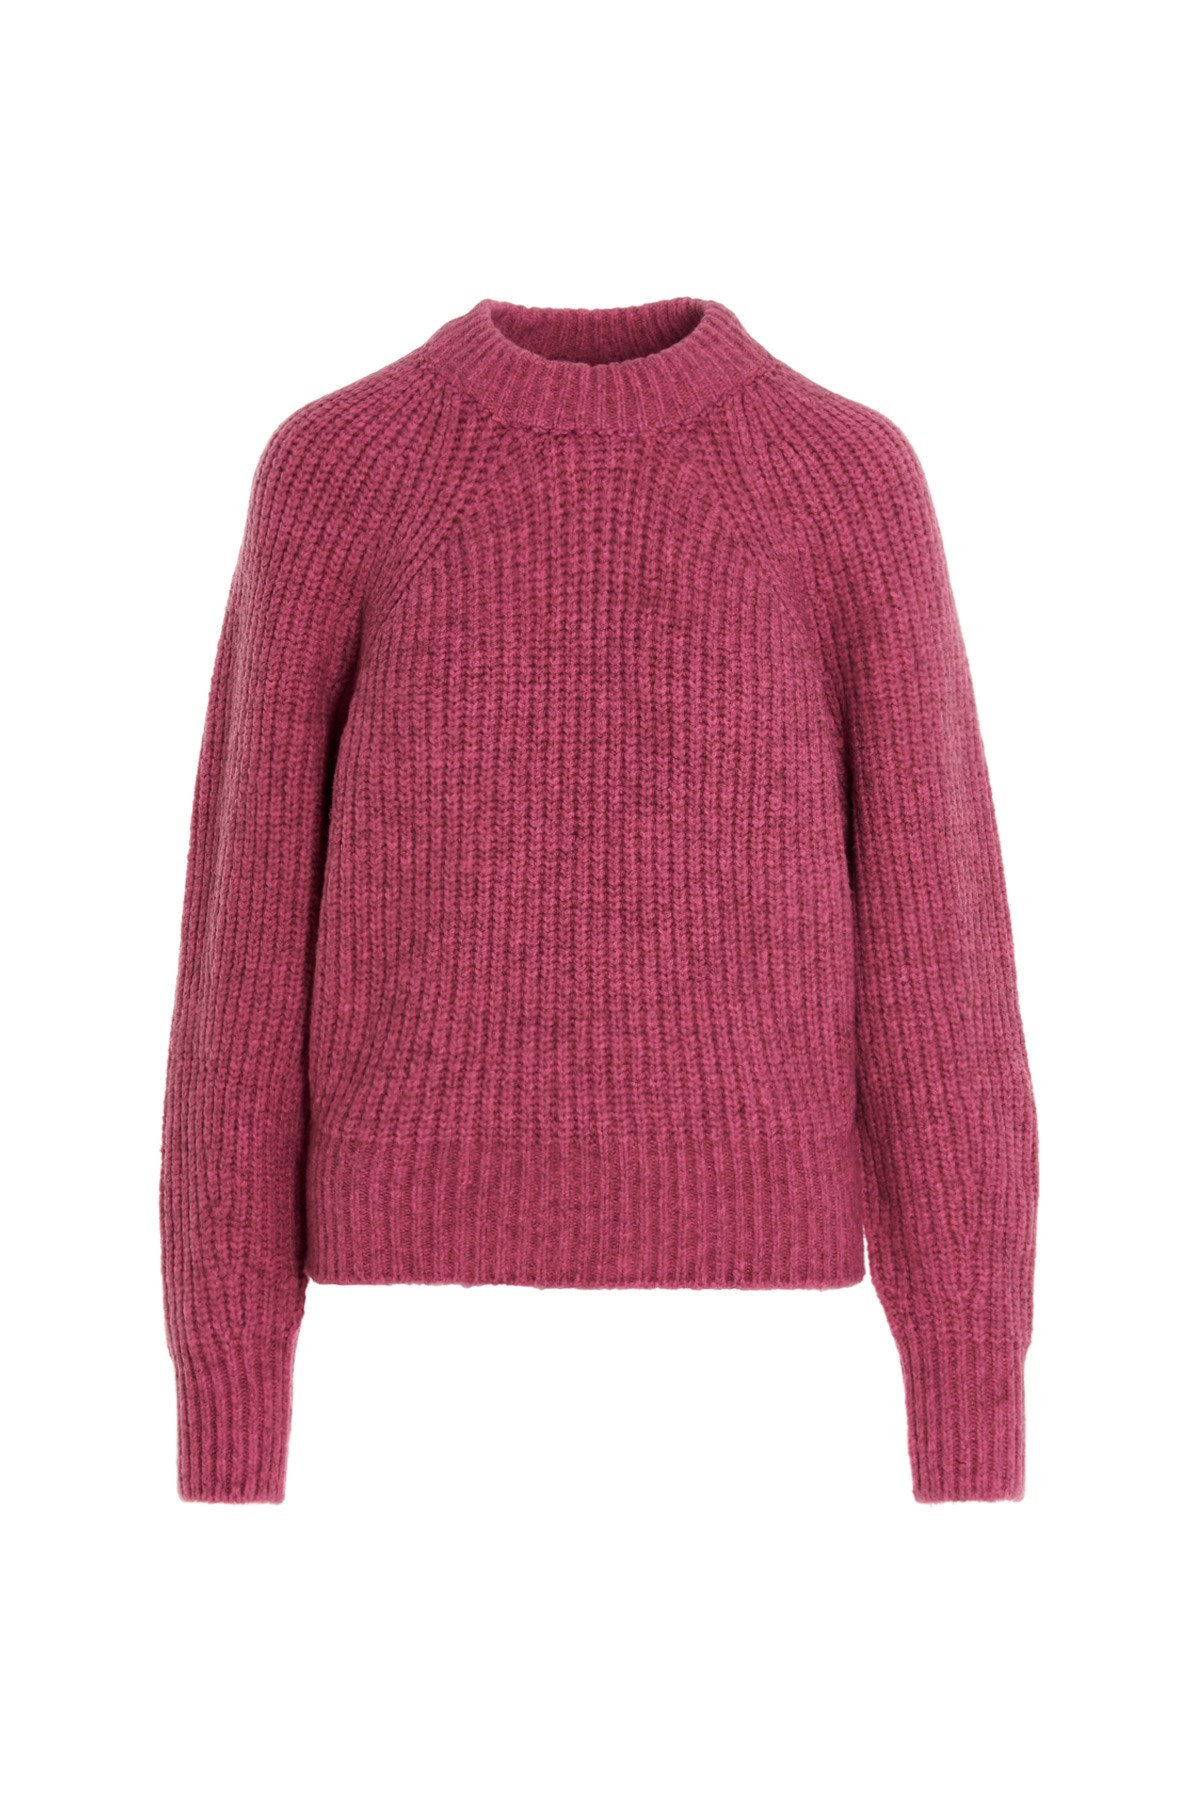 ISABEL MARANT 'Rosy’ Sweater